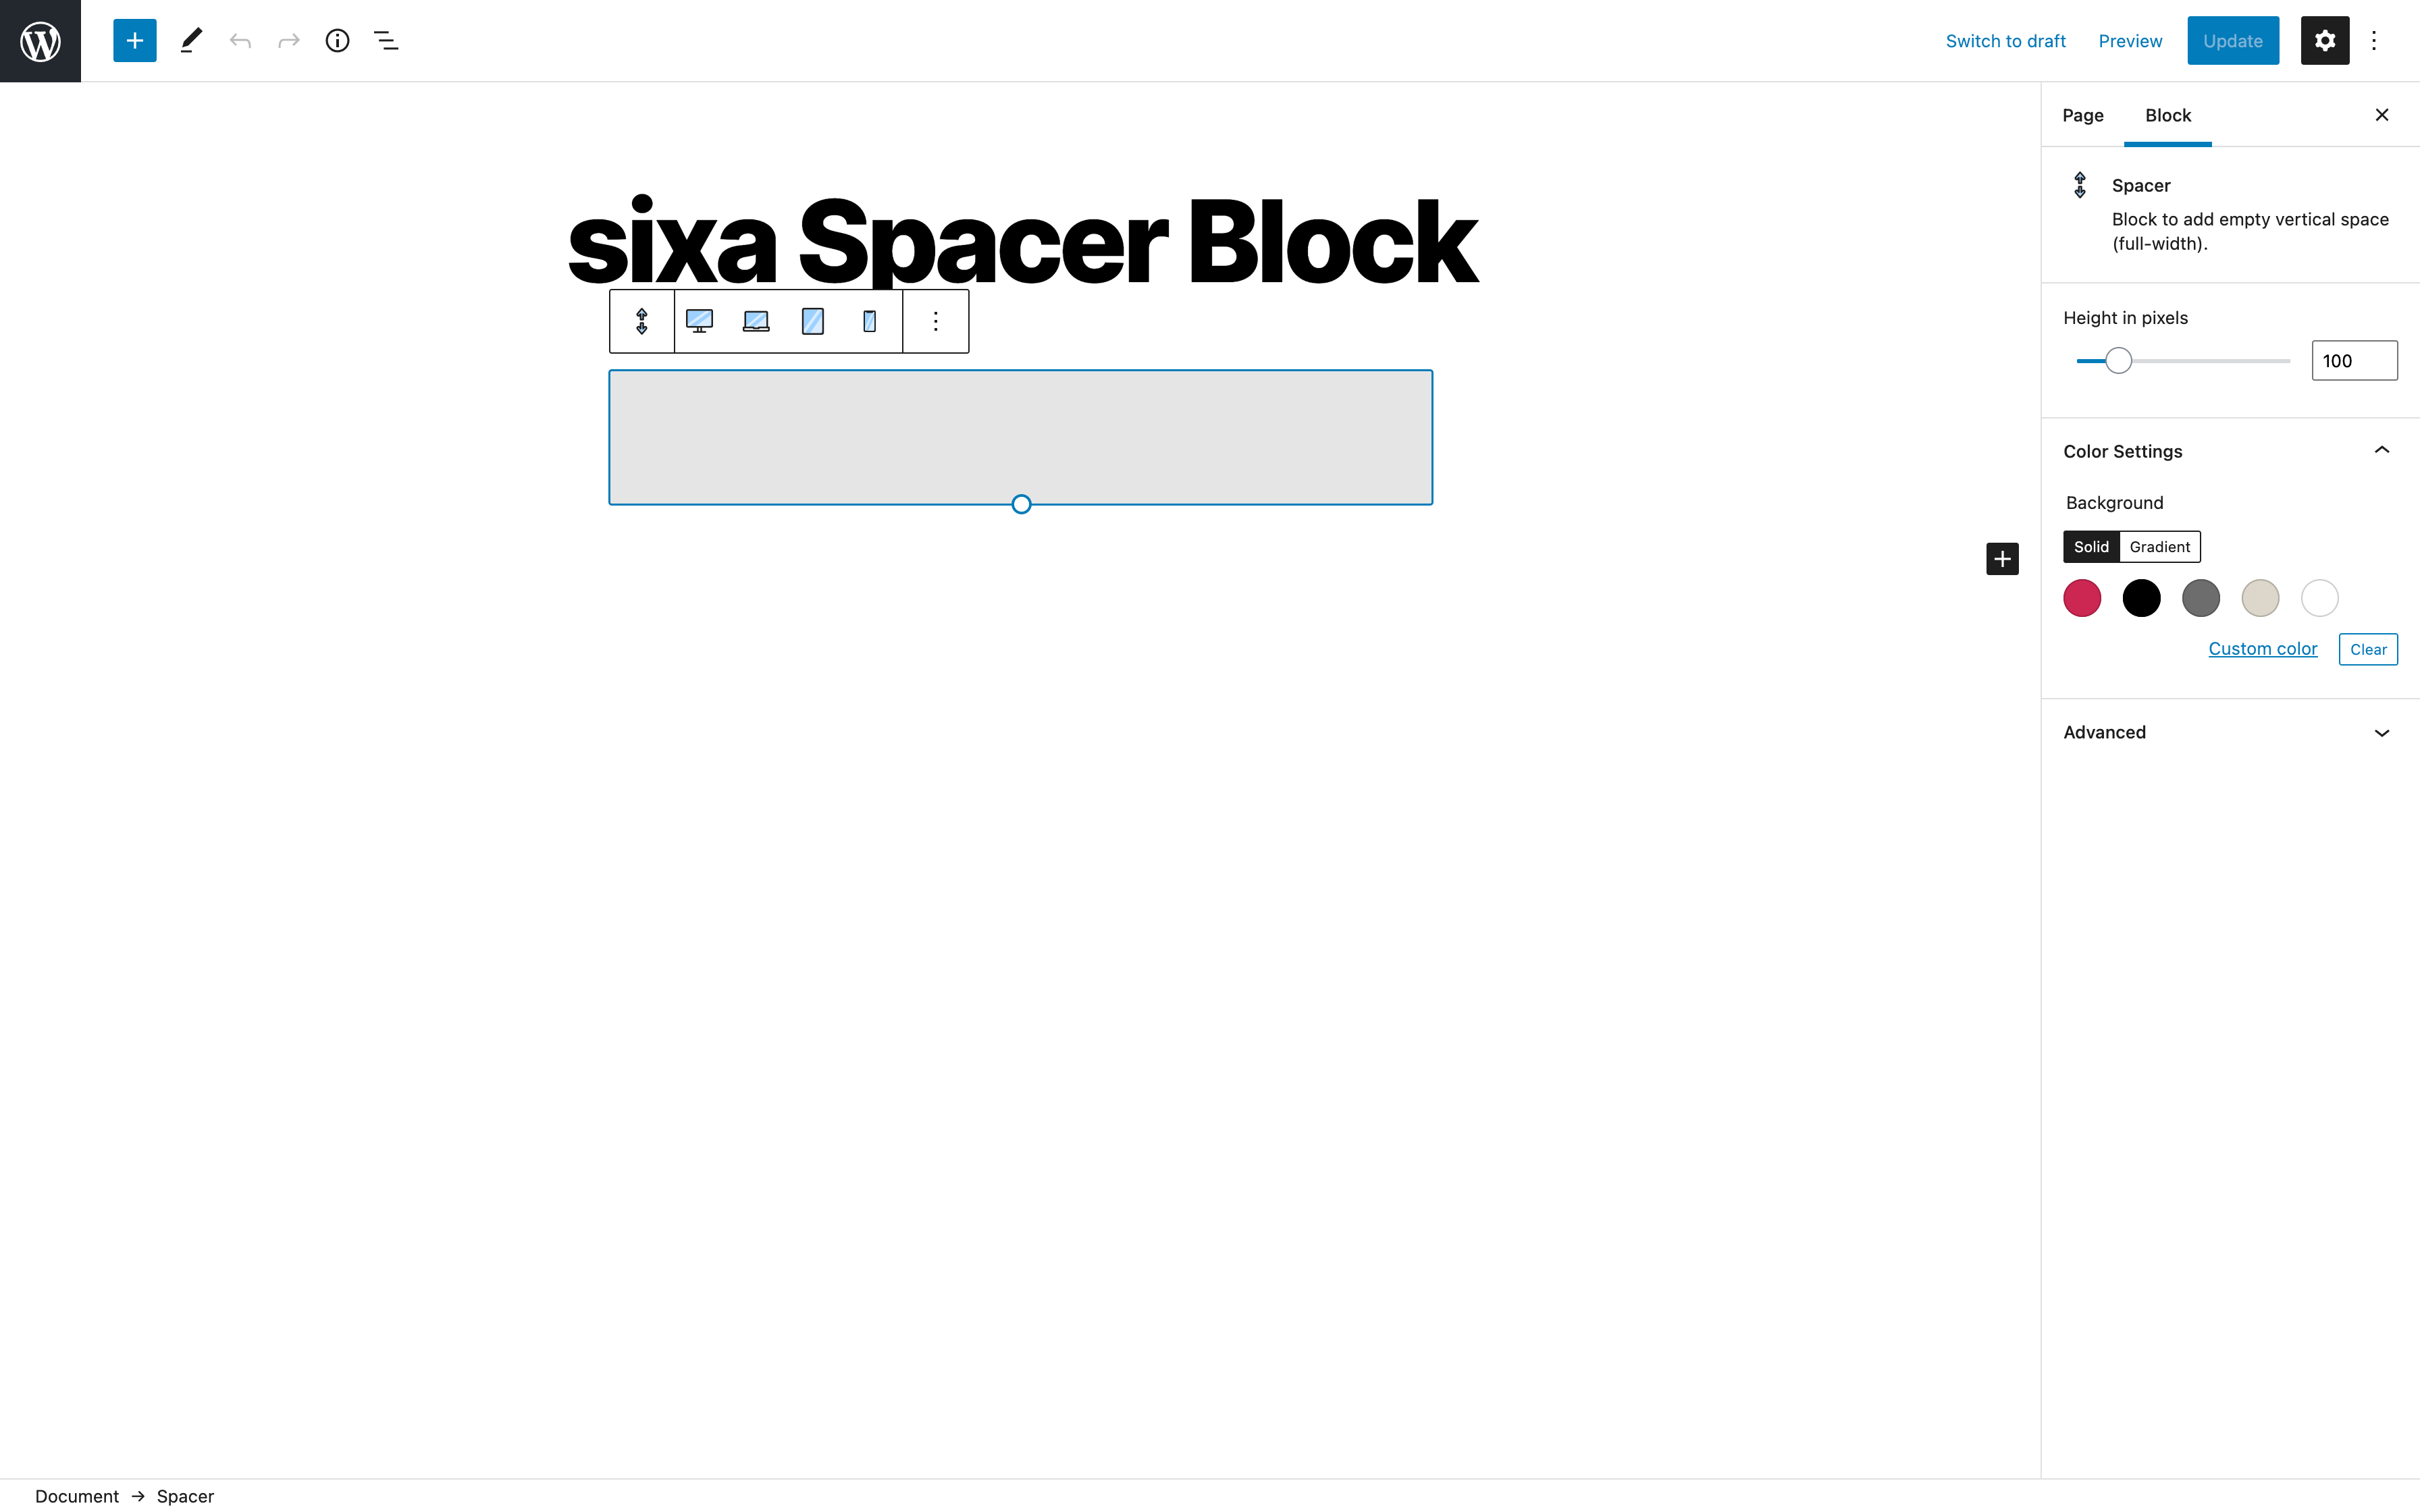 Add "Spacer" block